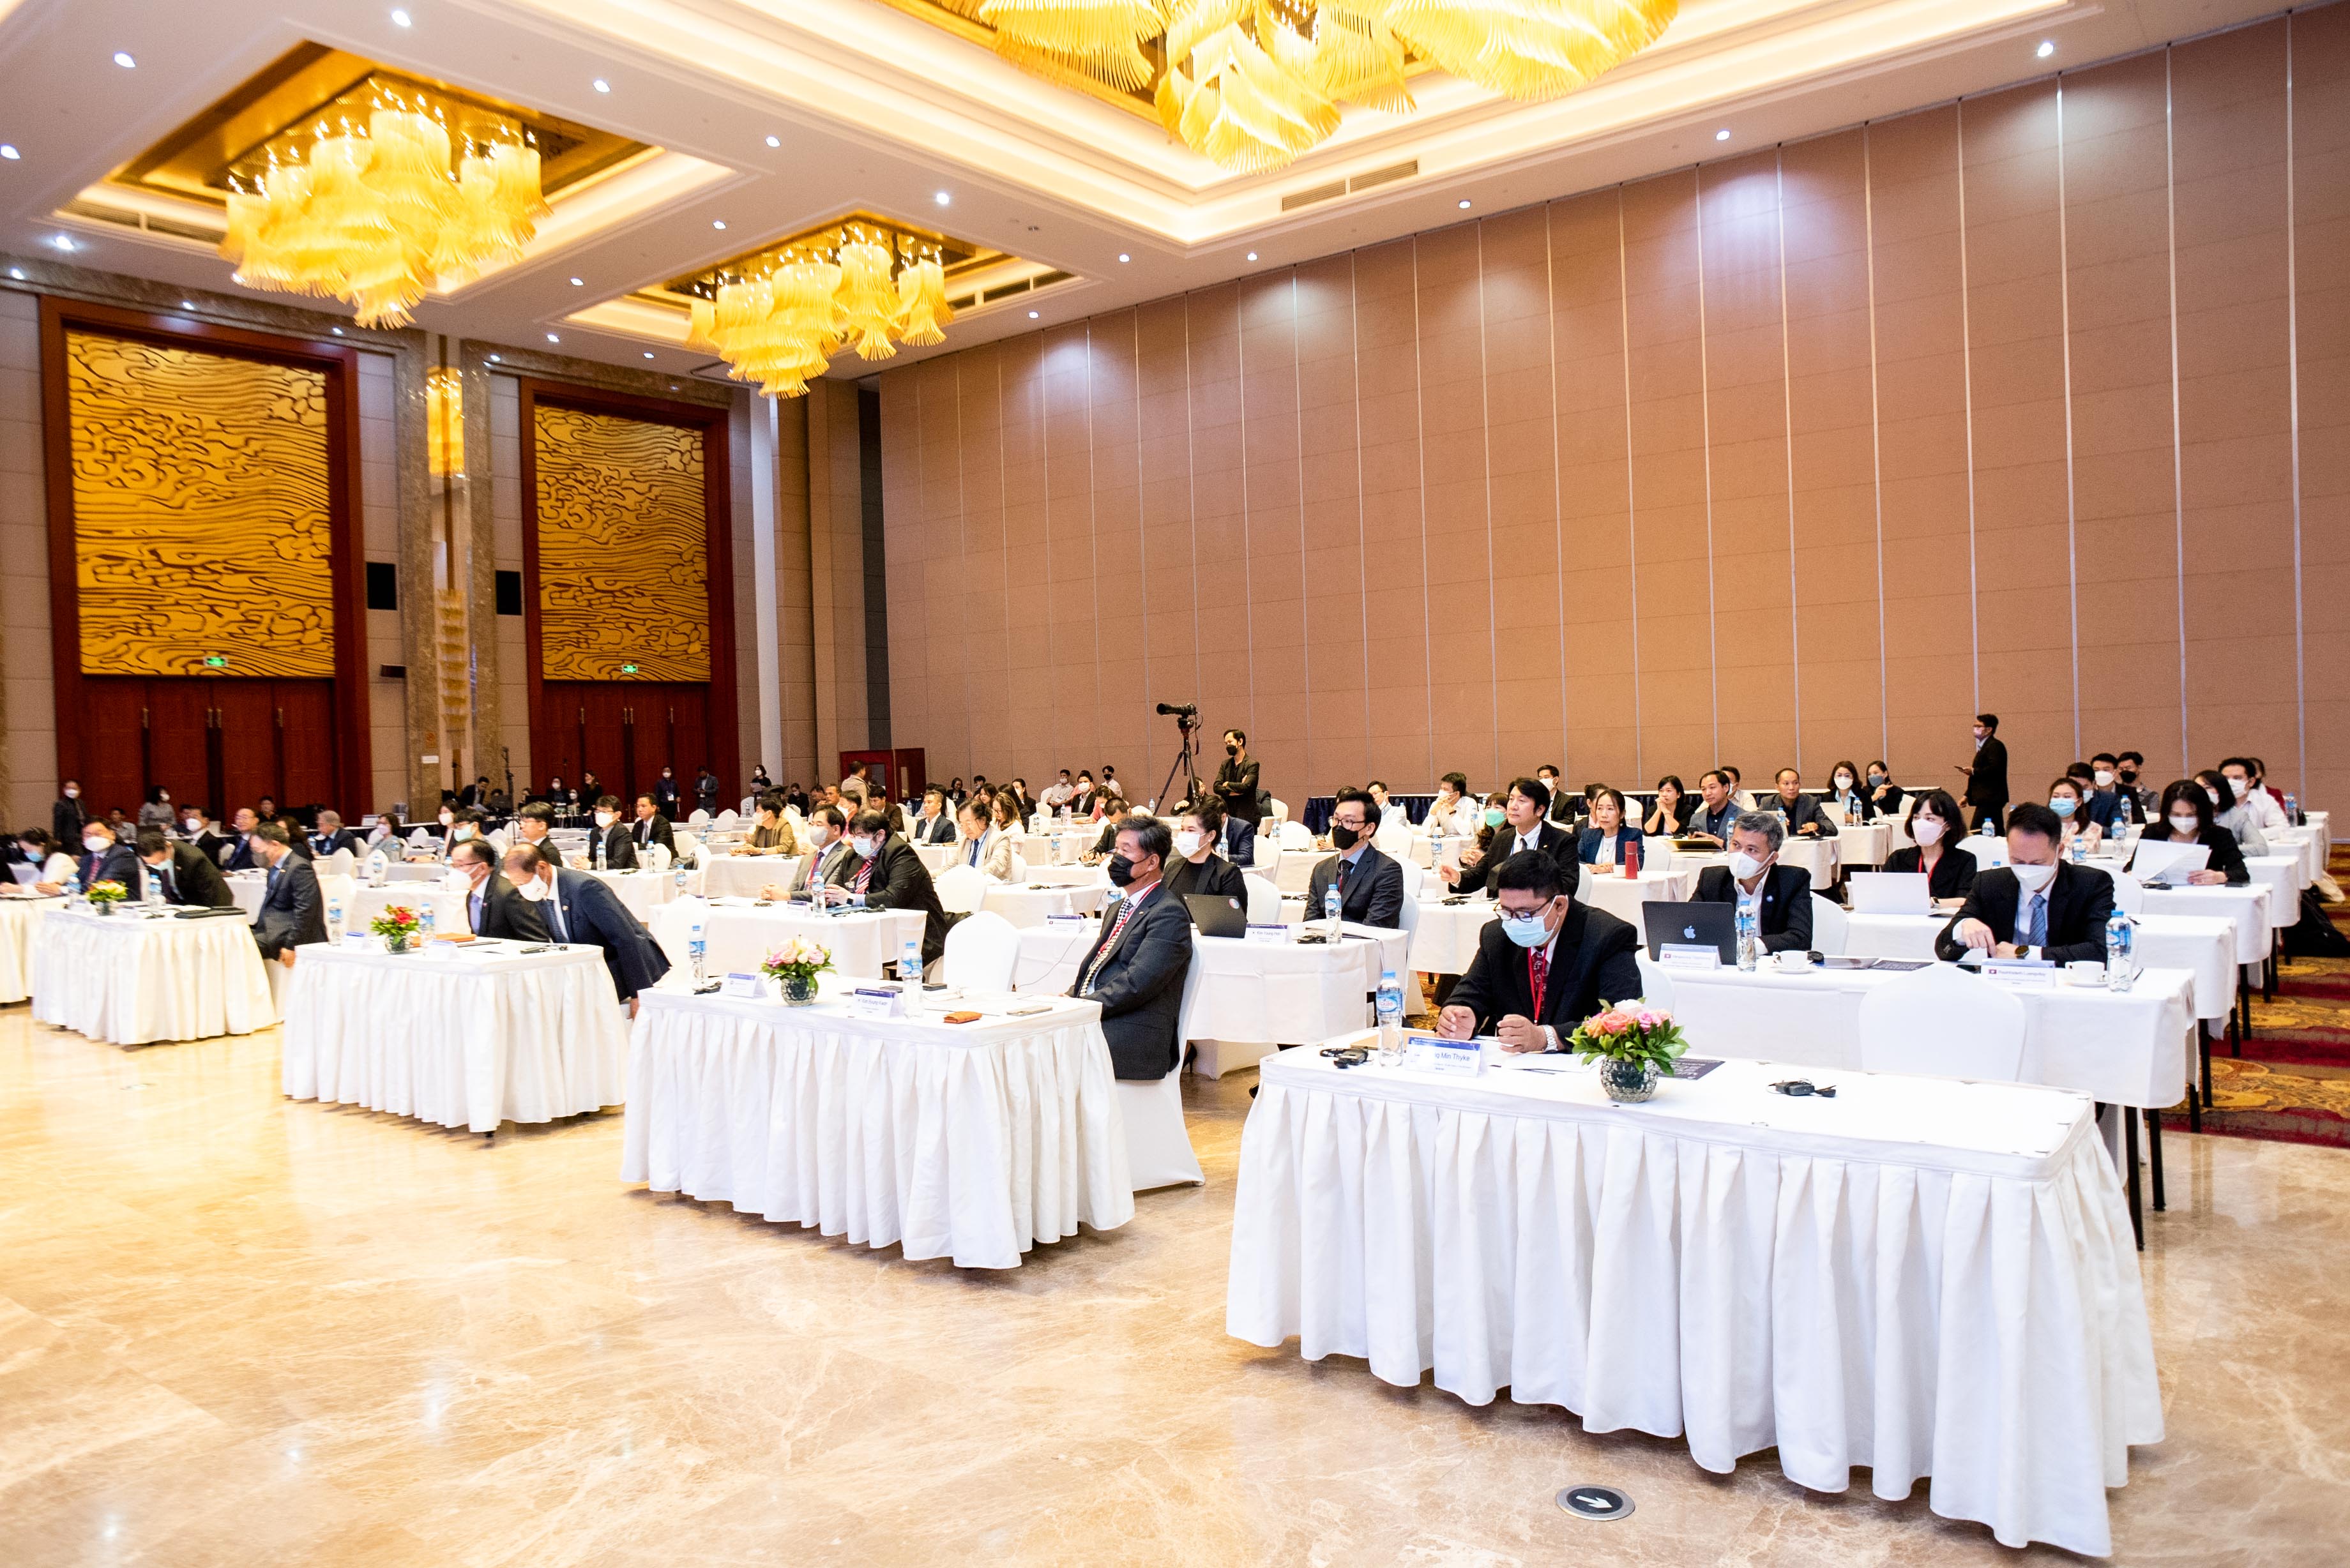 The 10th Mekong - Republic of Korea Business Forum & B2B Business Meeting